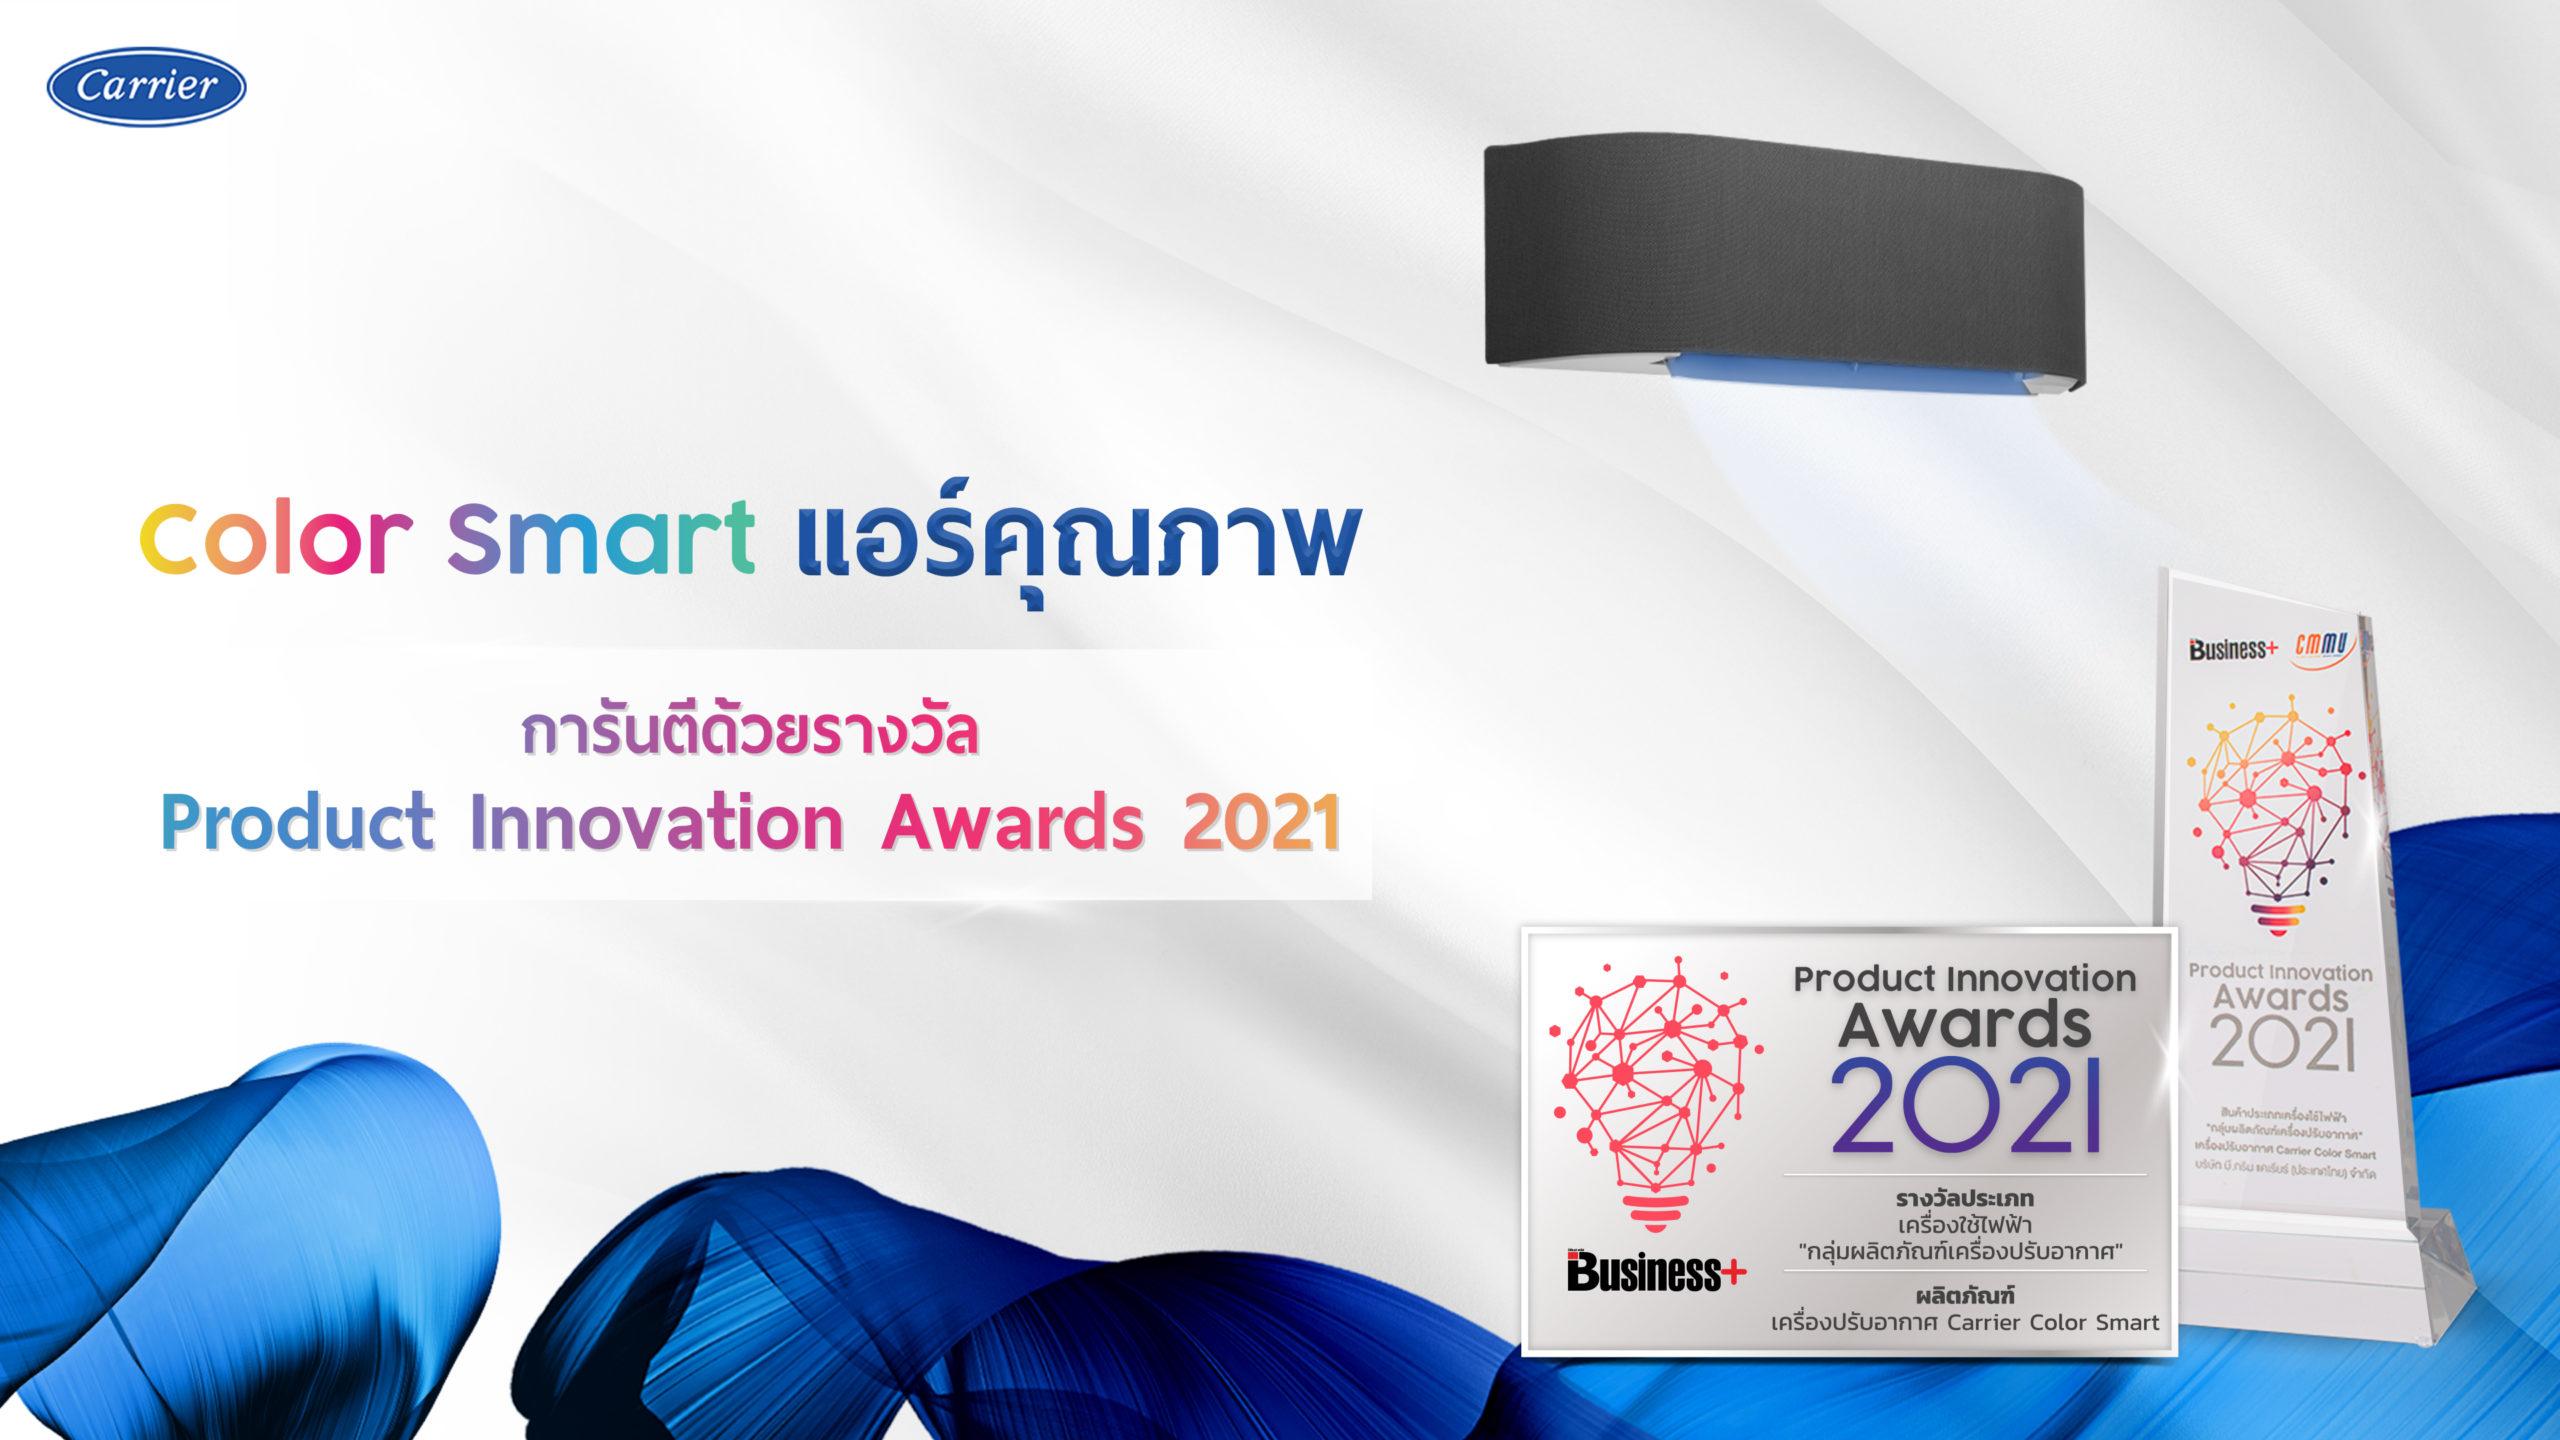 Color-Smart-แอร์คุณภาพ-การันตีด้วยรางวัล-Product-Innovation-Award